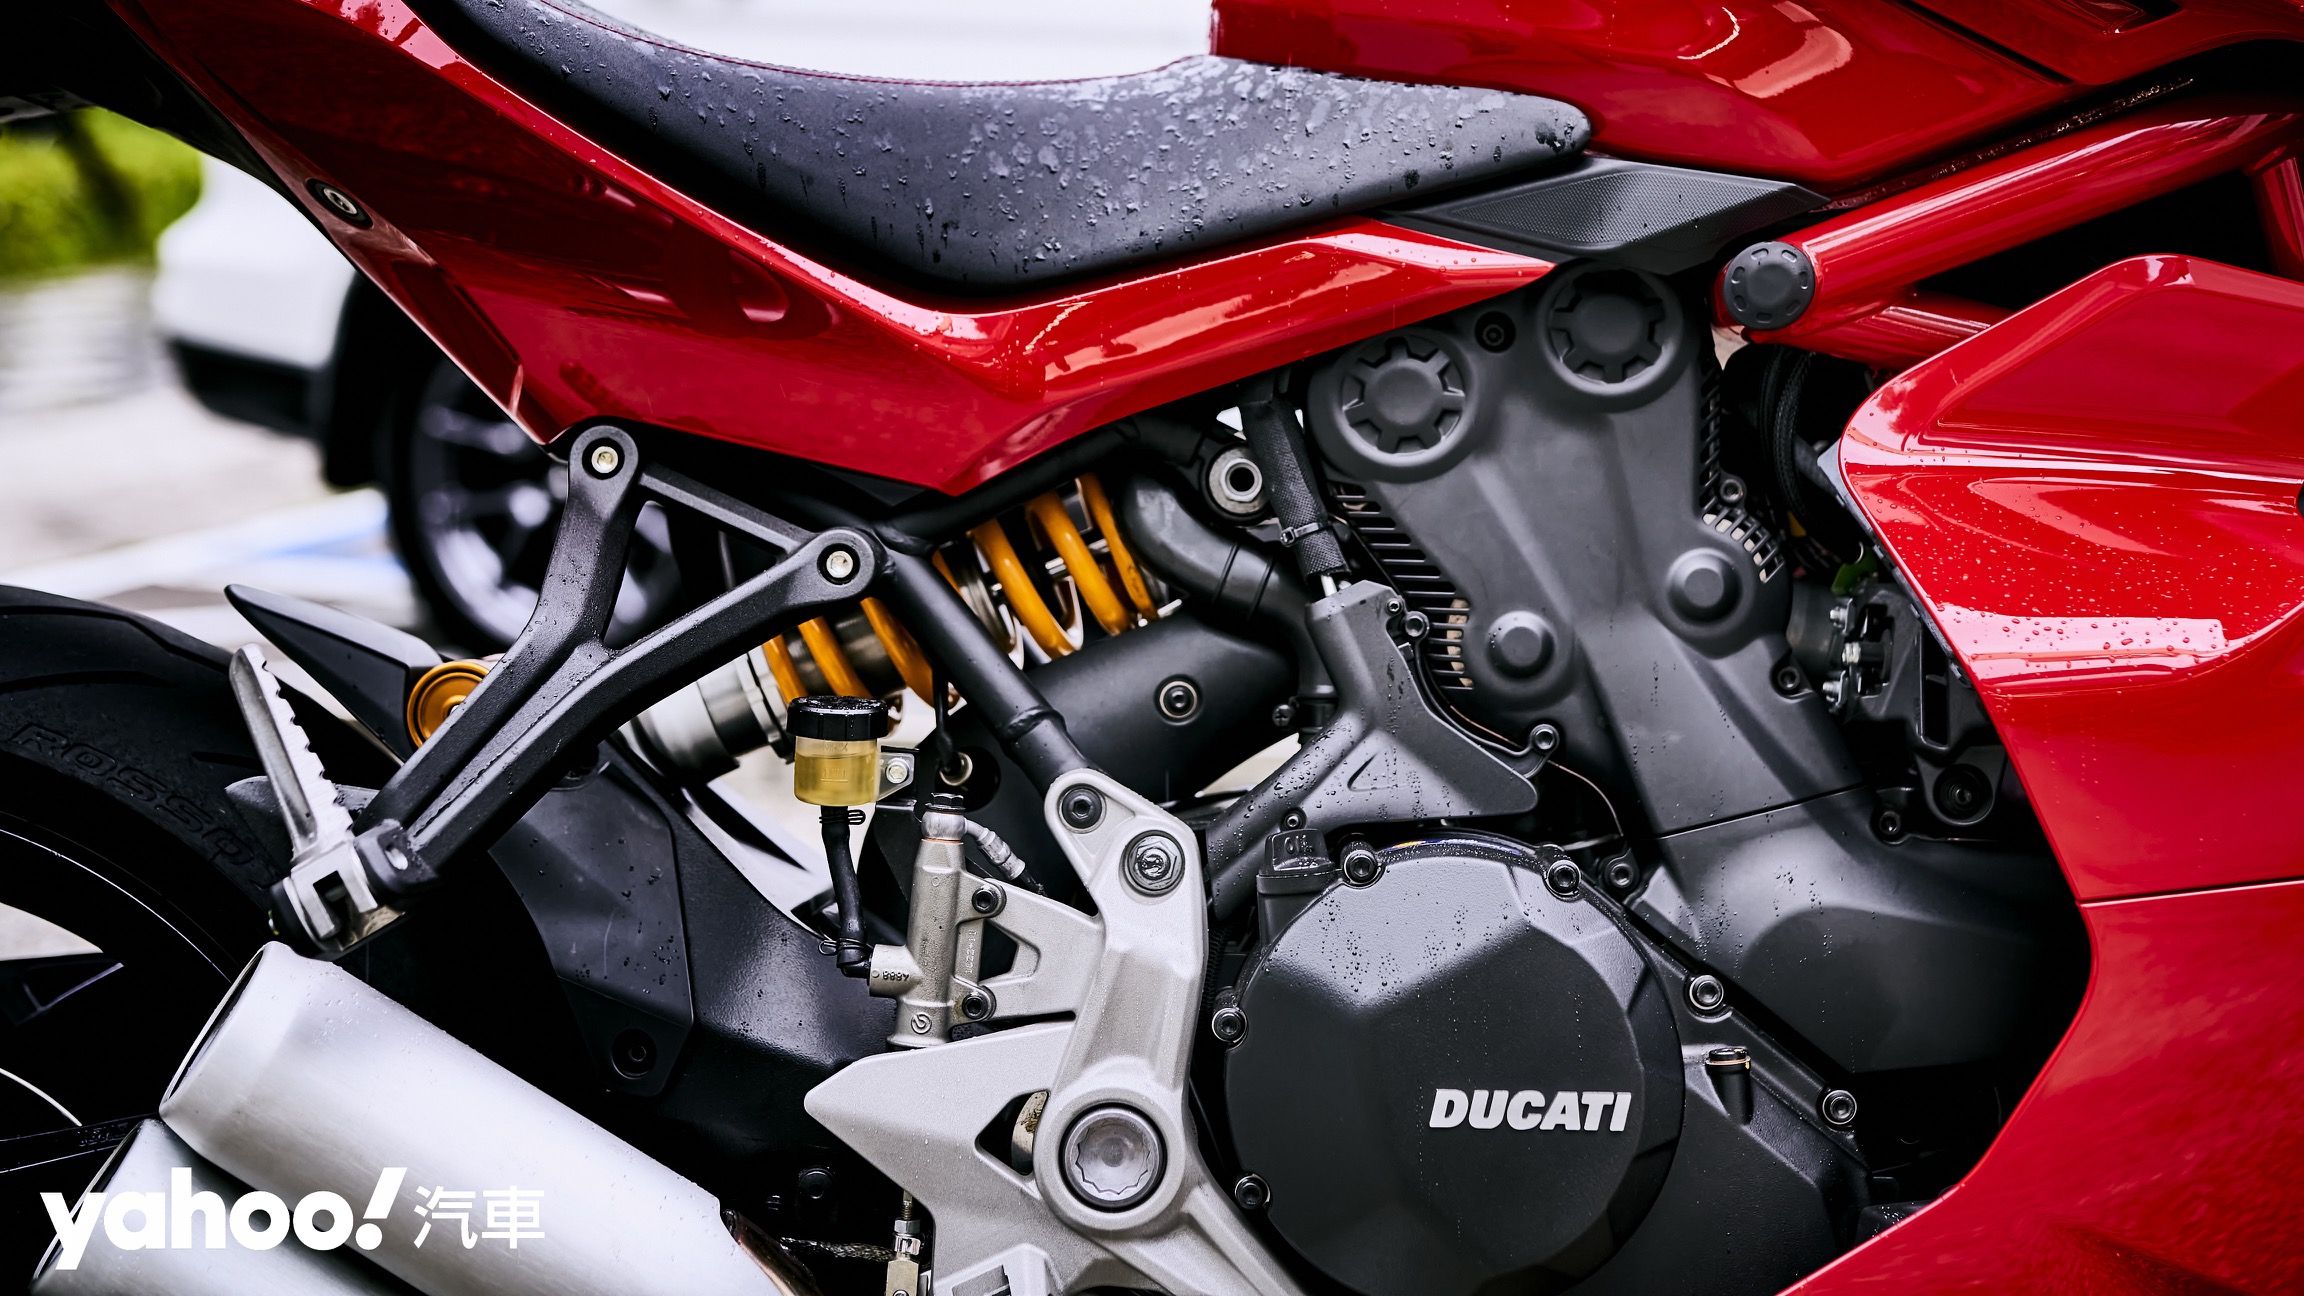 Ducati品牌主力引擎Testastretta 11°具有高度泛用性。